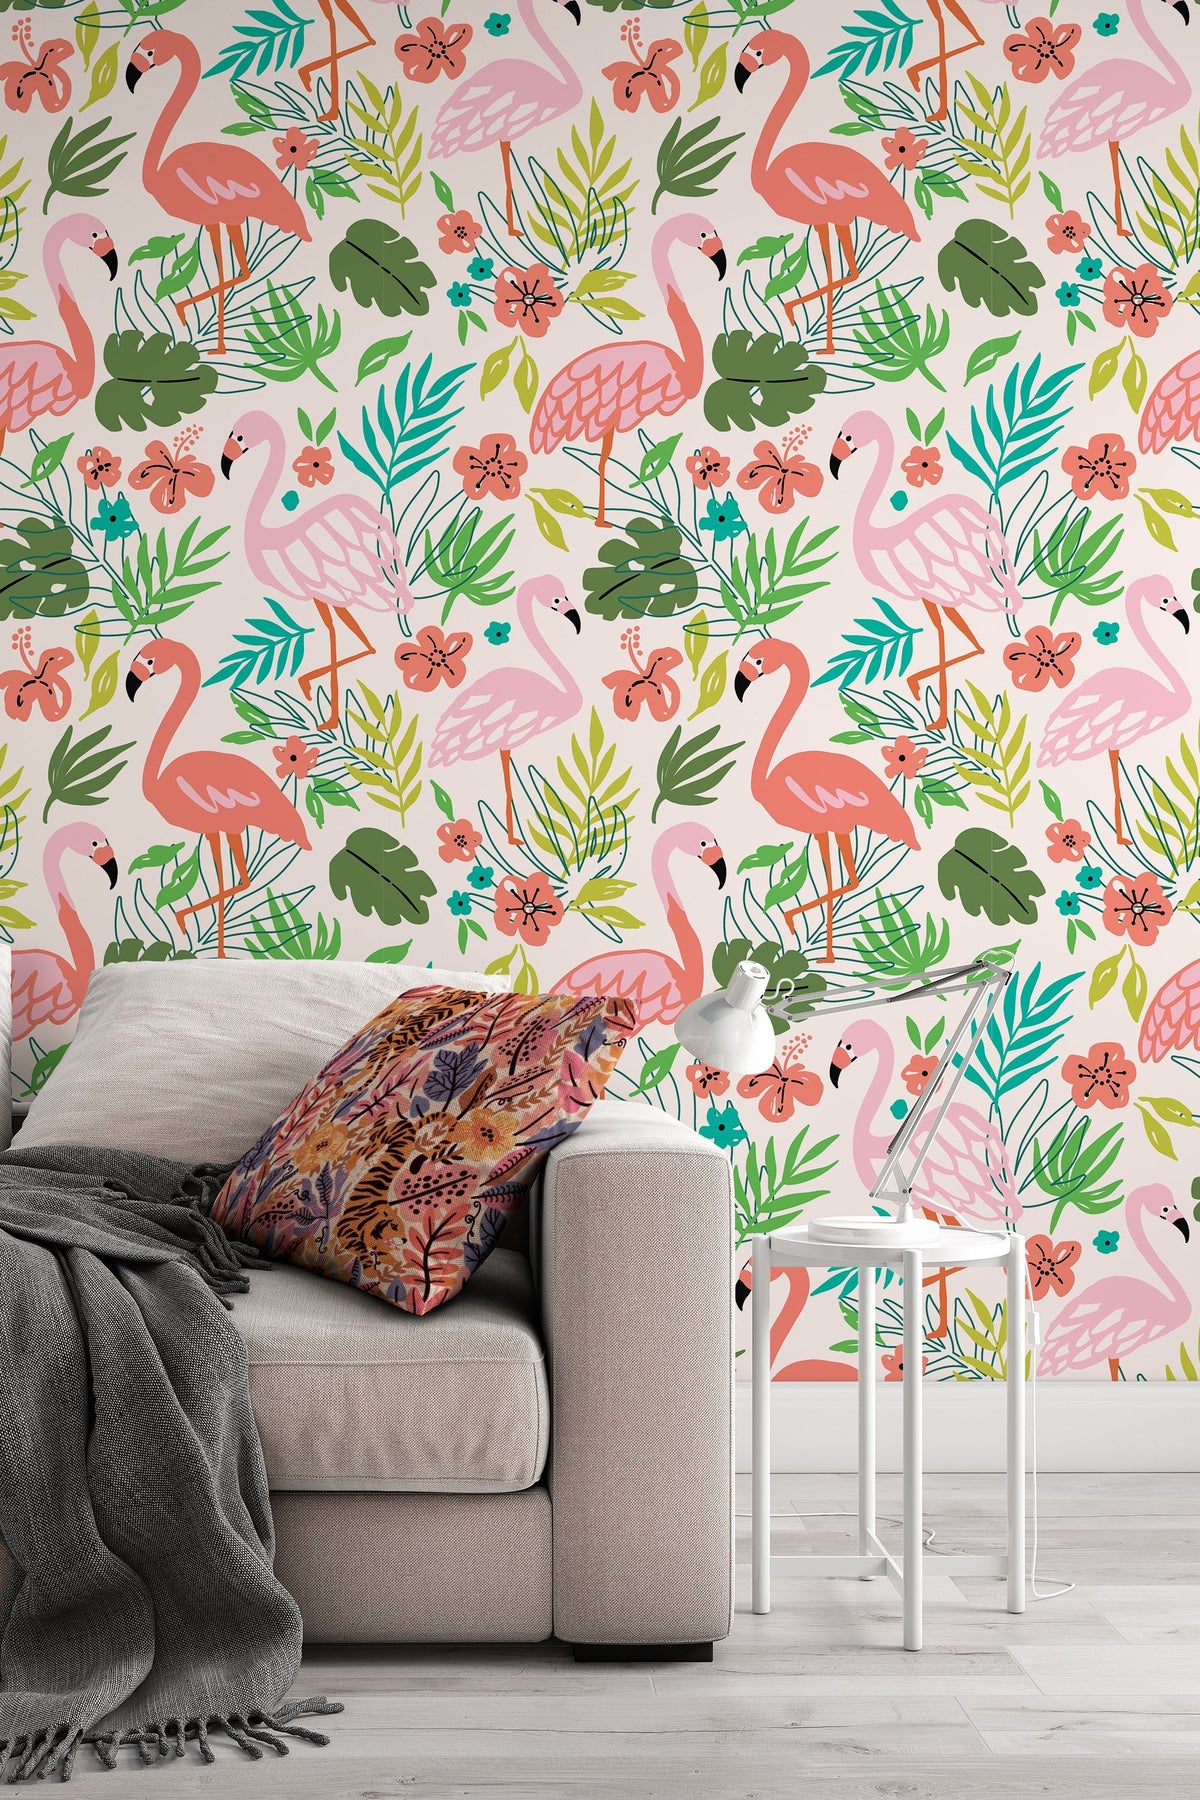 3D Tropical Flamingo ZHUB1362 Wallpaper Wall Mural Removable Self-adhesive  Ann | eBay